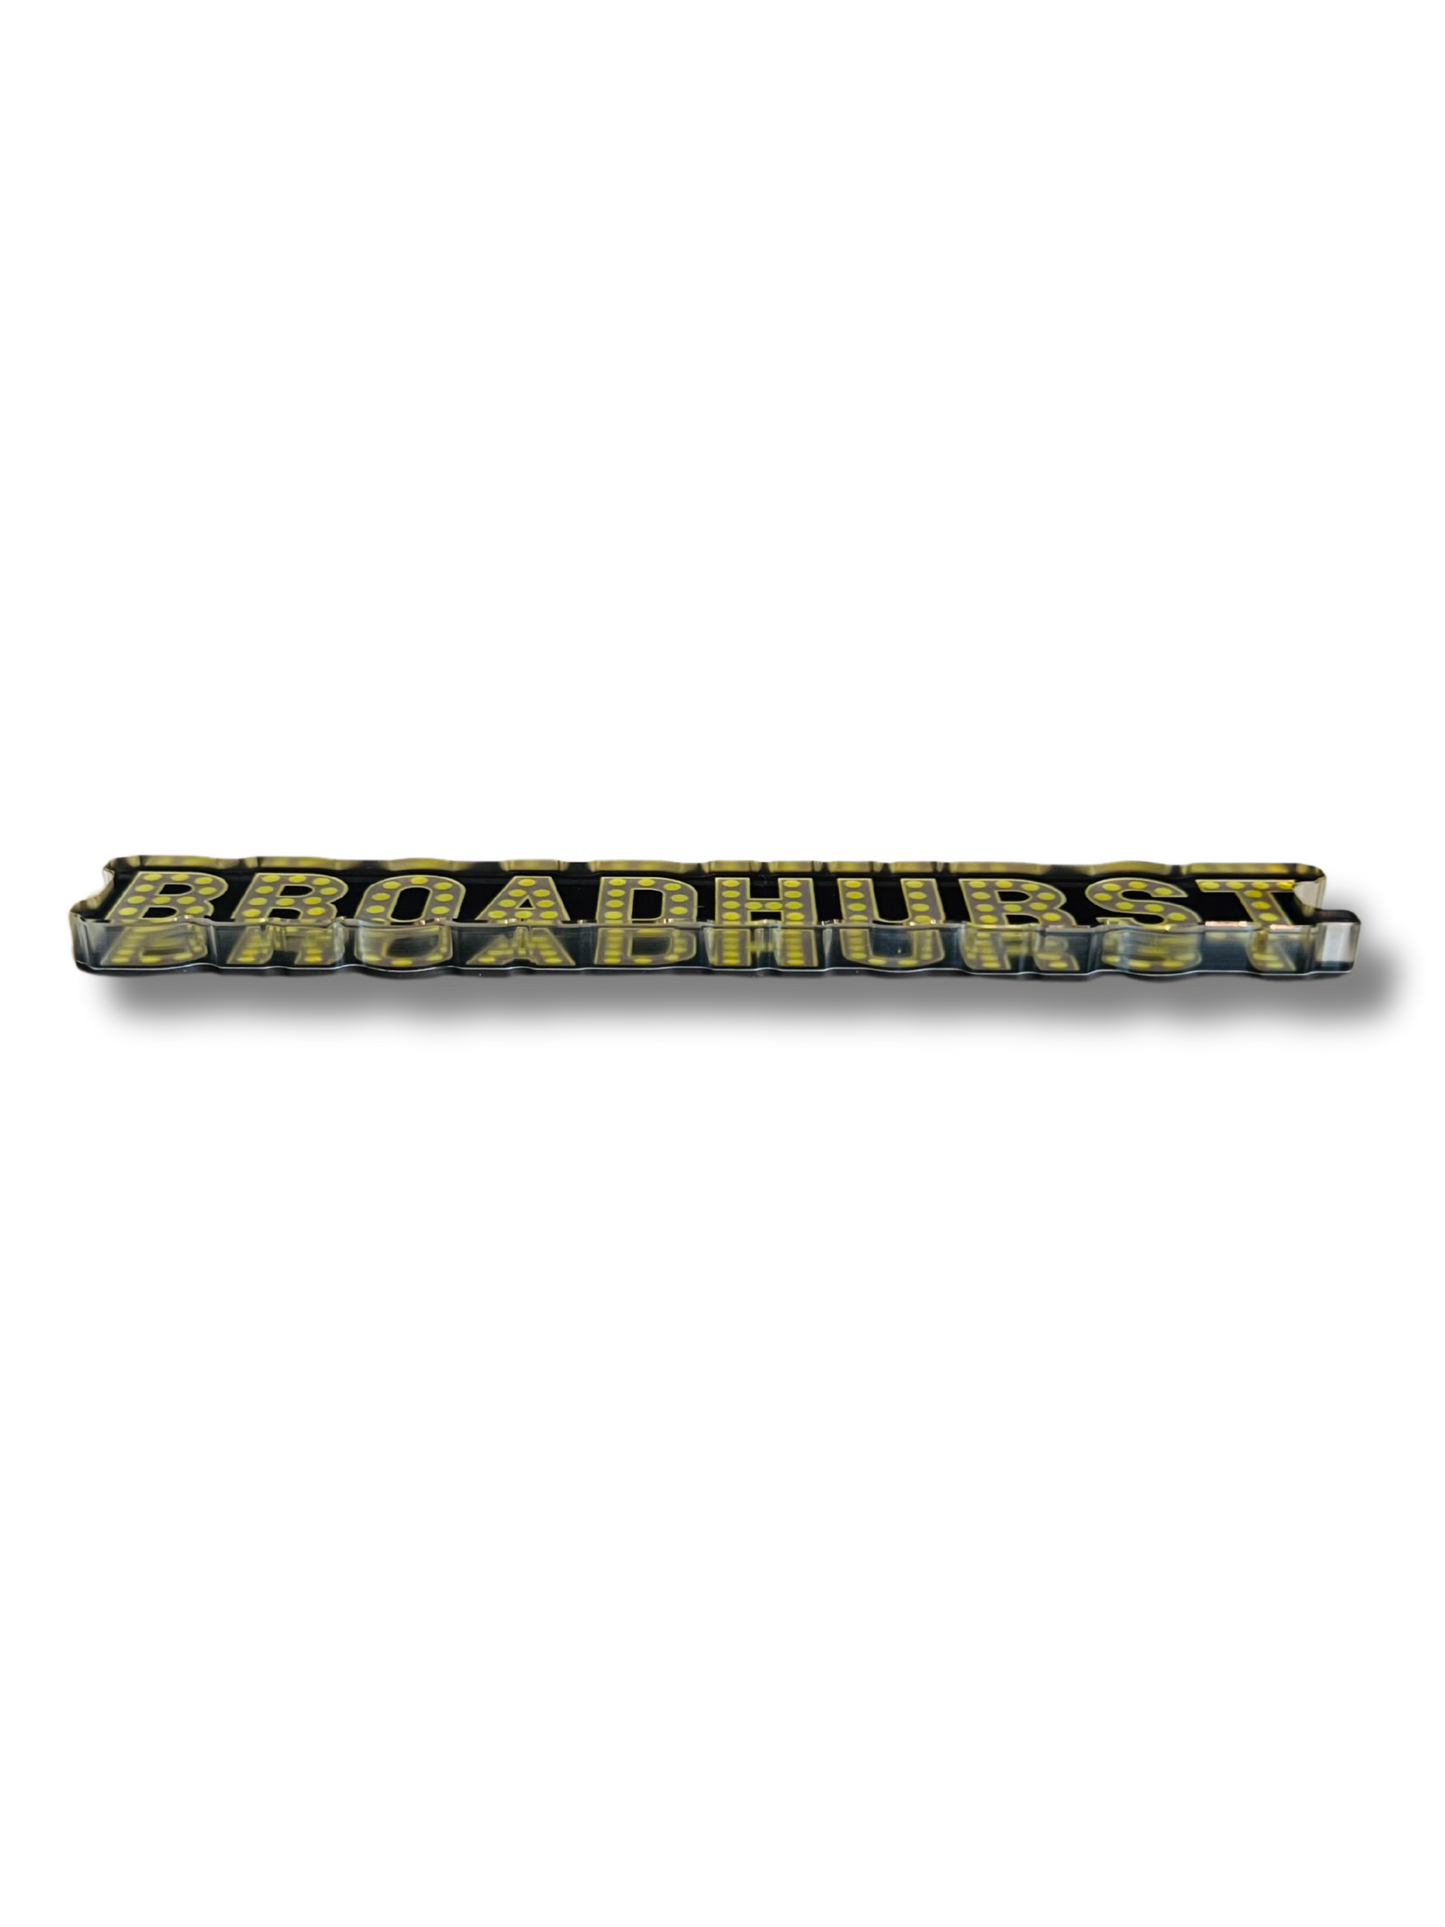 Broadhurst Marquee Acrylic Magnet